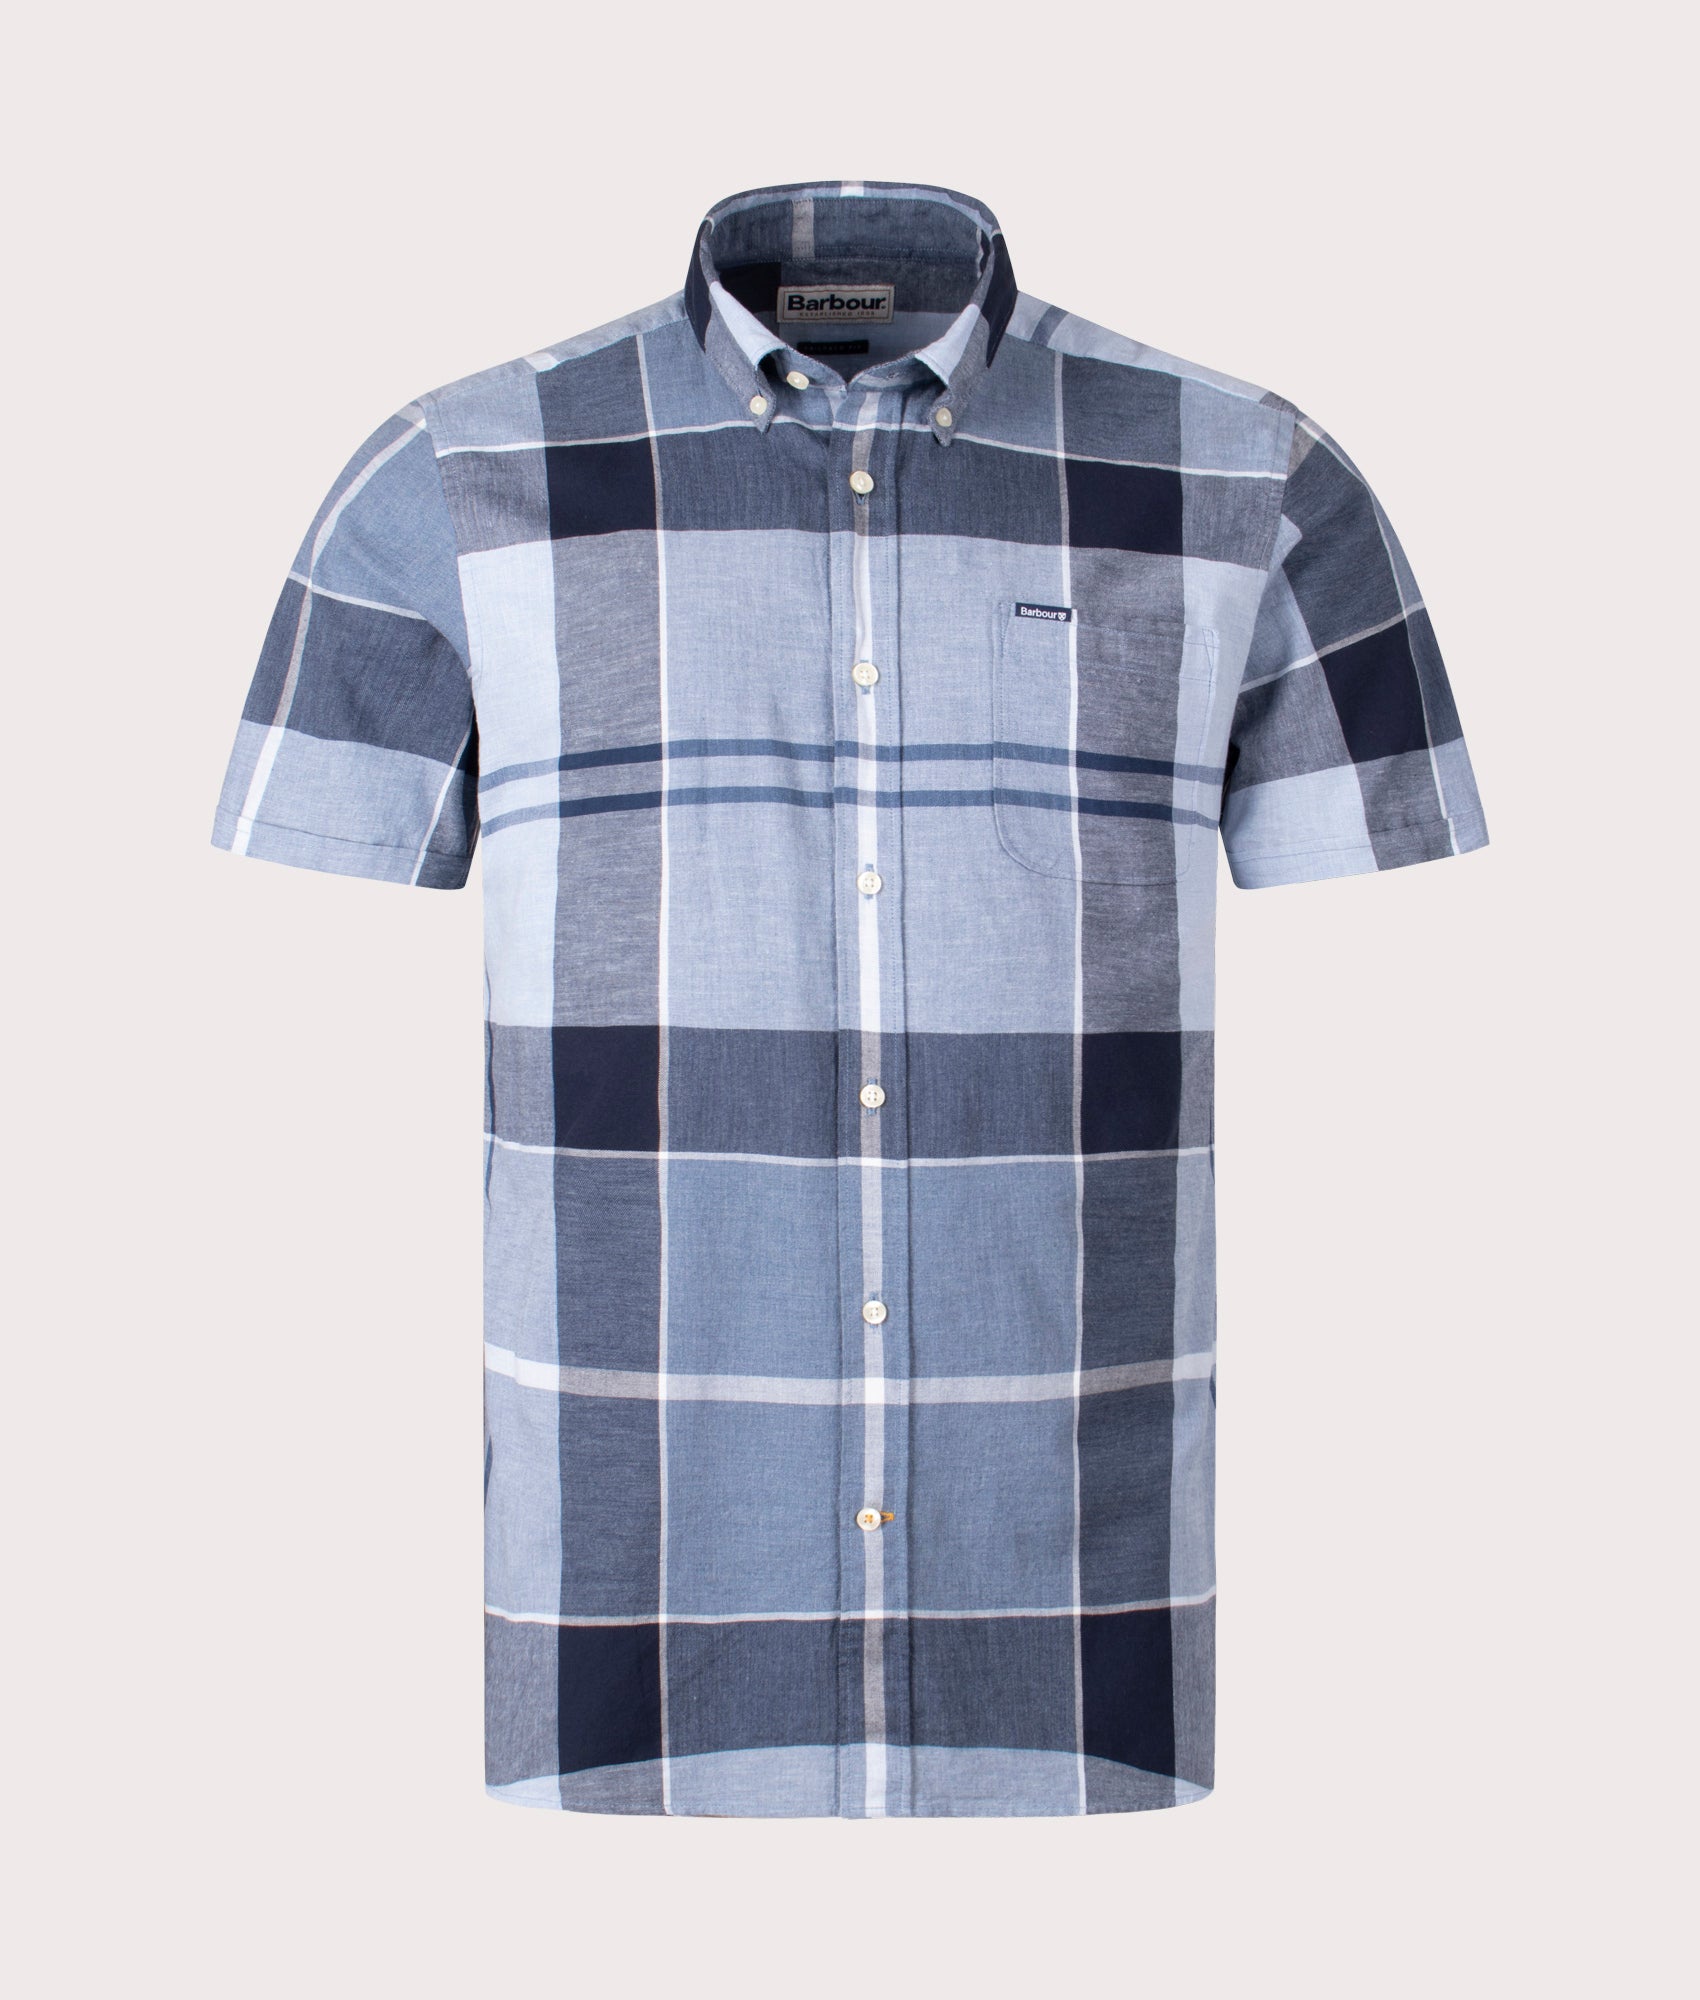 Barbour Lifestyle Mens Short Sleeve Doughill Shirt - Colour: TN22 Berwick Blue - Size: XL